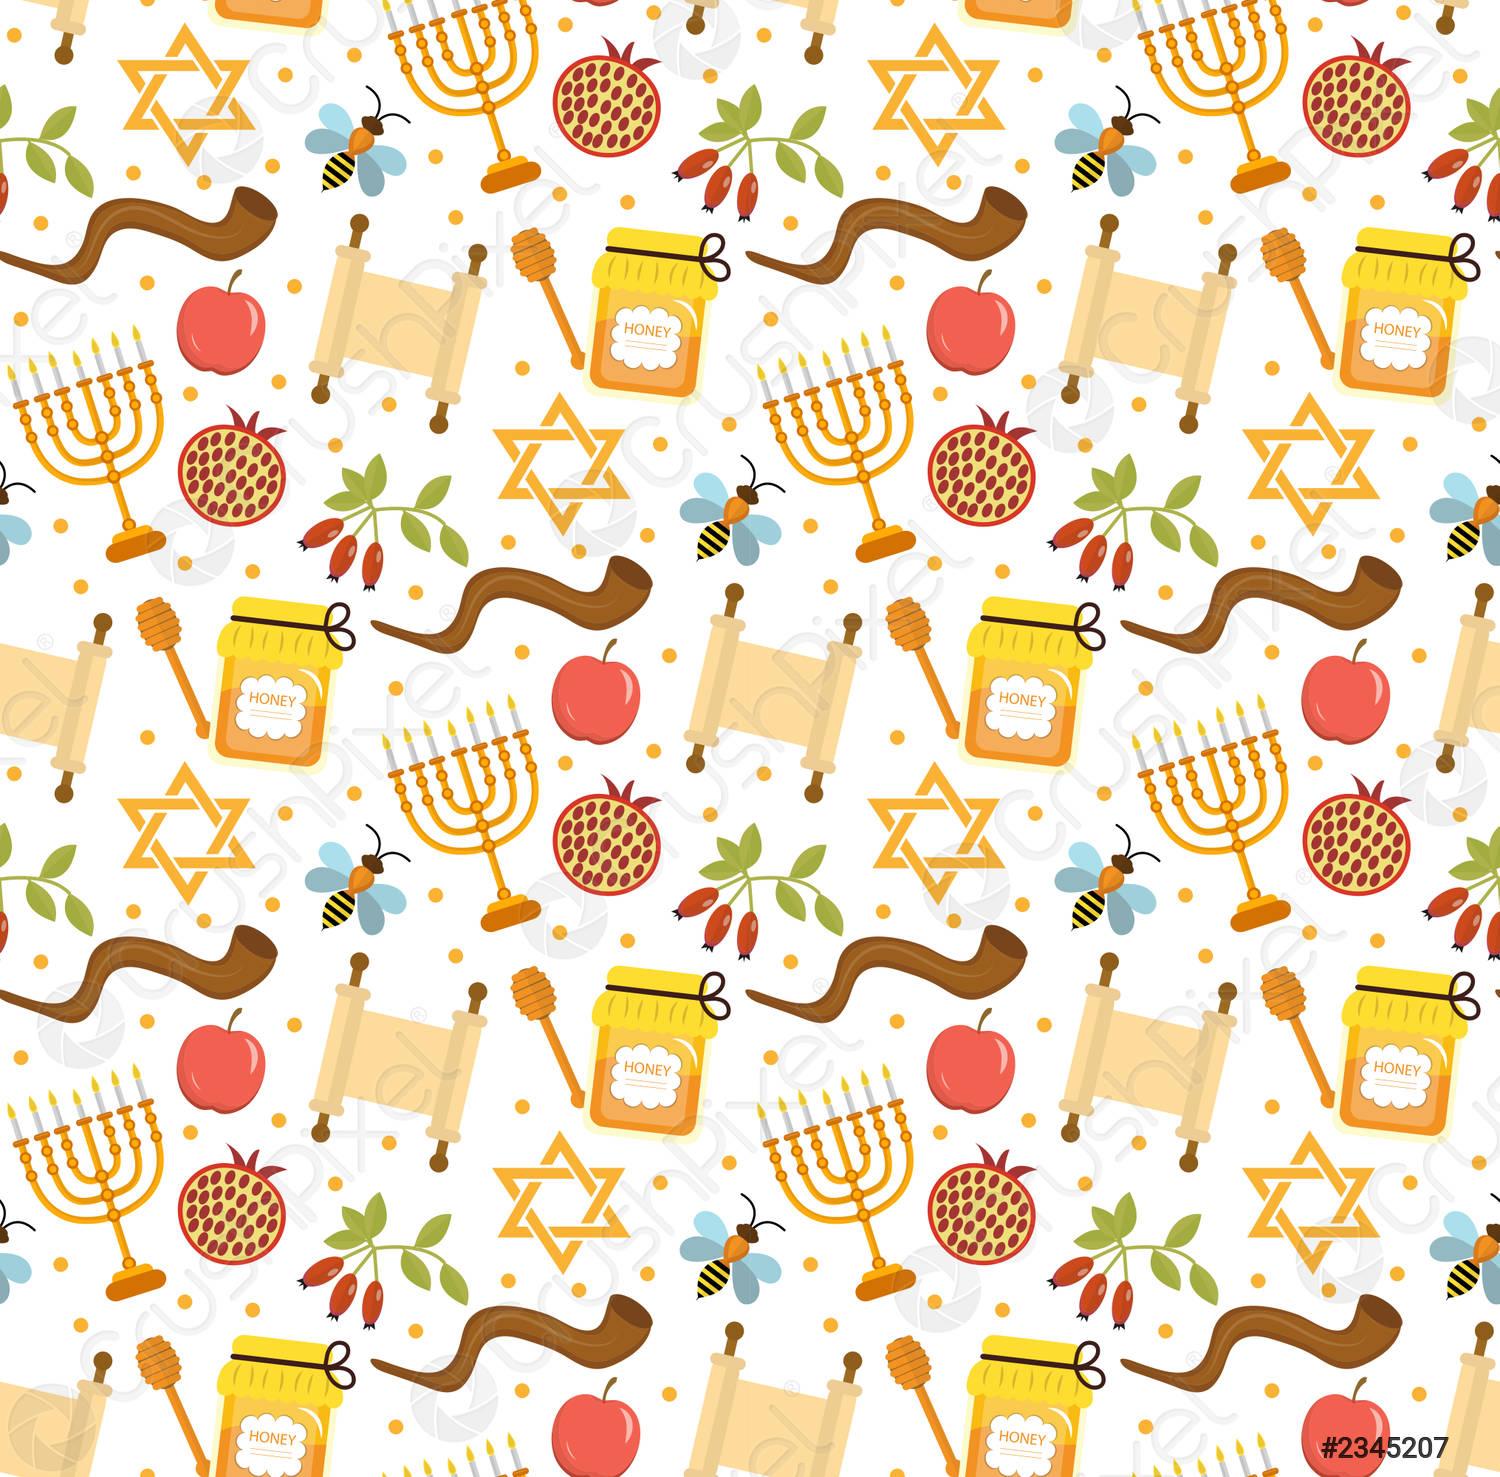 Laeacco Happy Rosh Hashanah Background 10x6.5ft Jewish Holiday Vinyl Photography Backdrop Festive Apple Sweet Honey Shofar Pomegranate Grape Judaism Star of David Shana Tova Photo Prop Studio Banner